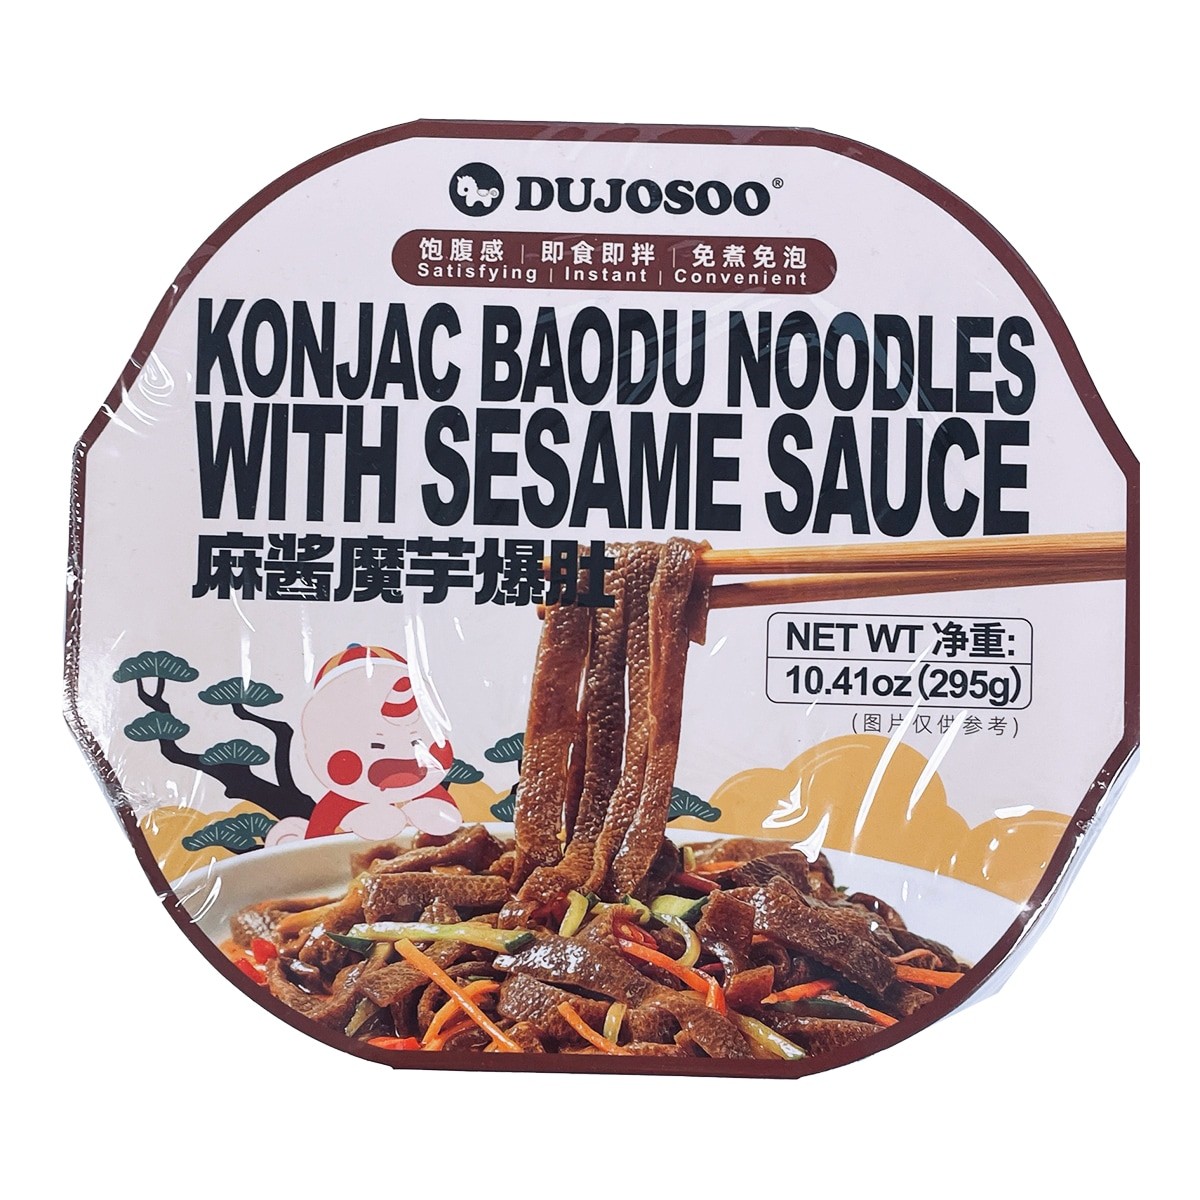 spicy-konjac-baodu-noodles